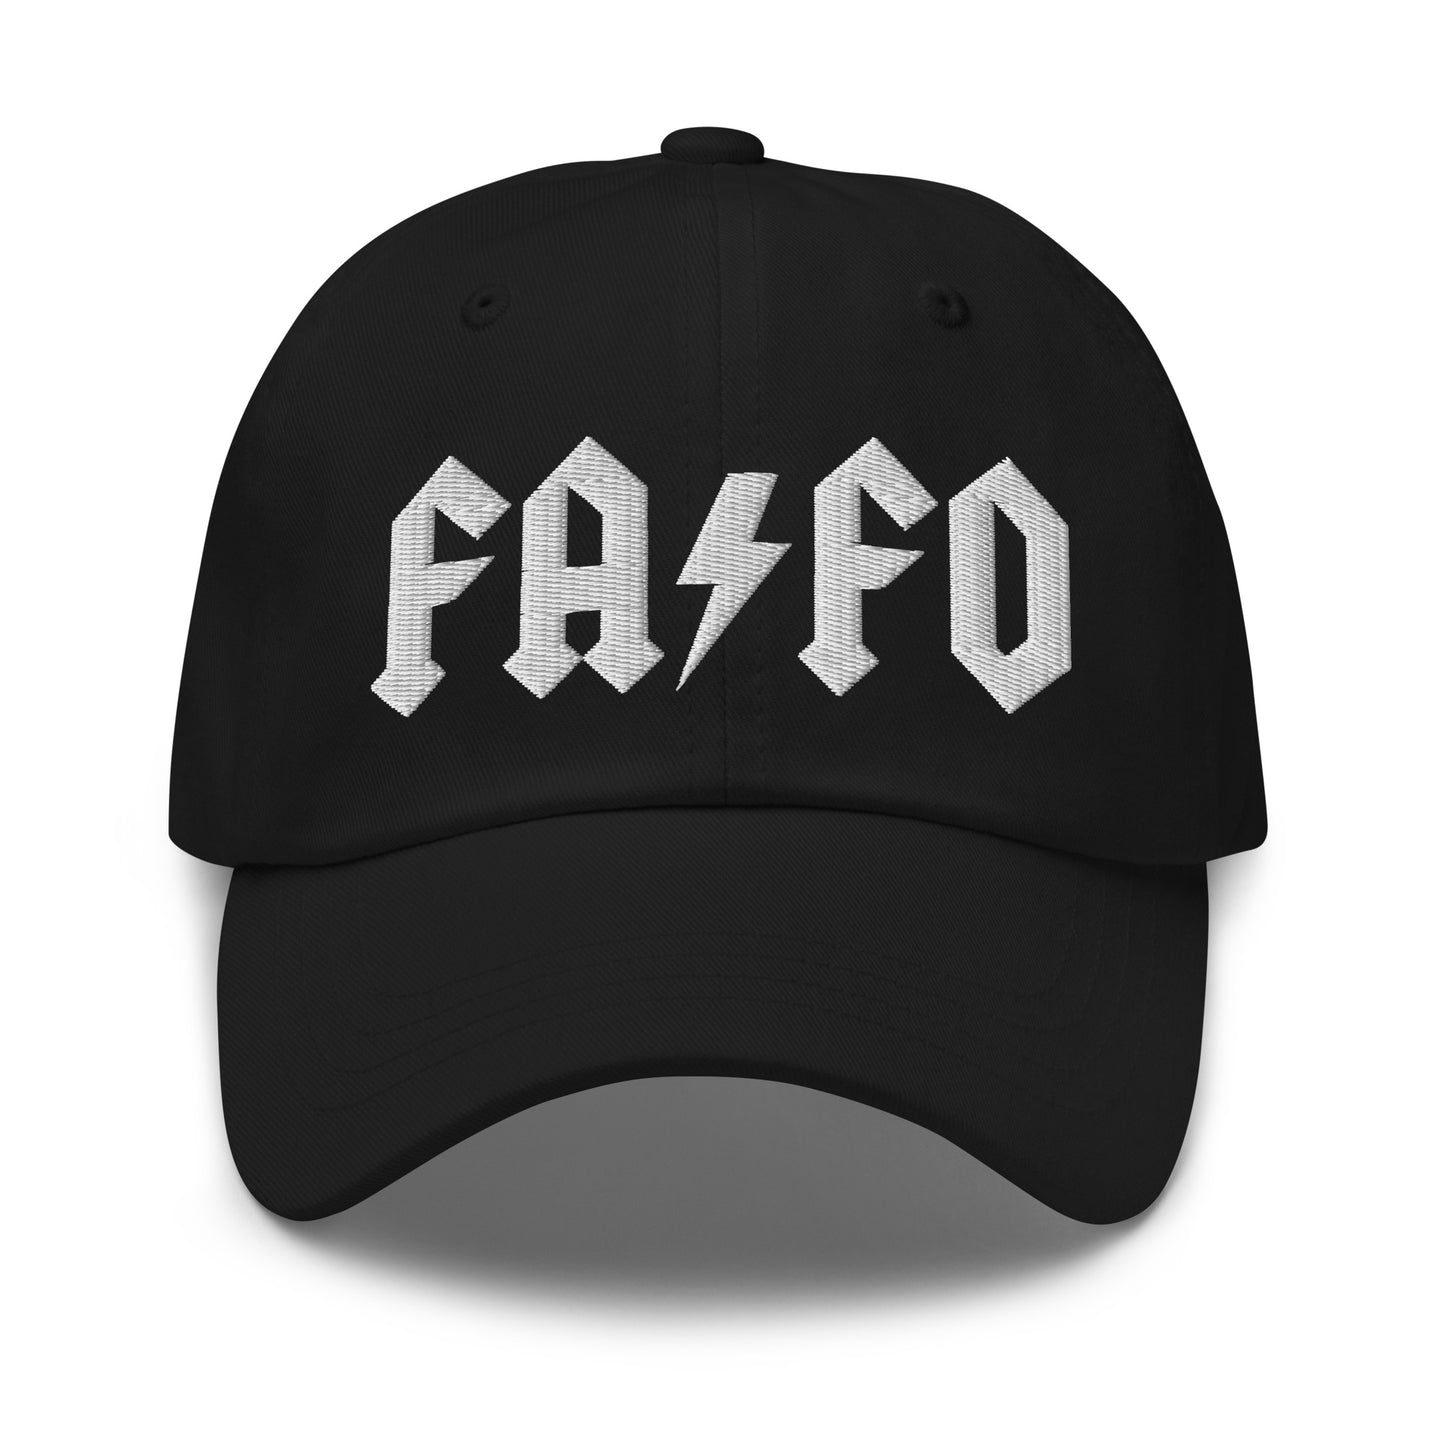 FAFO Hat